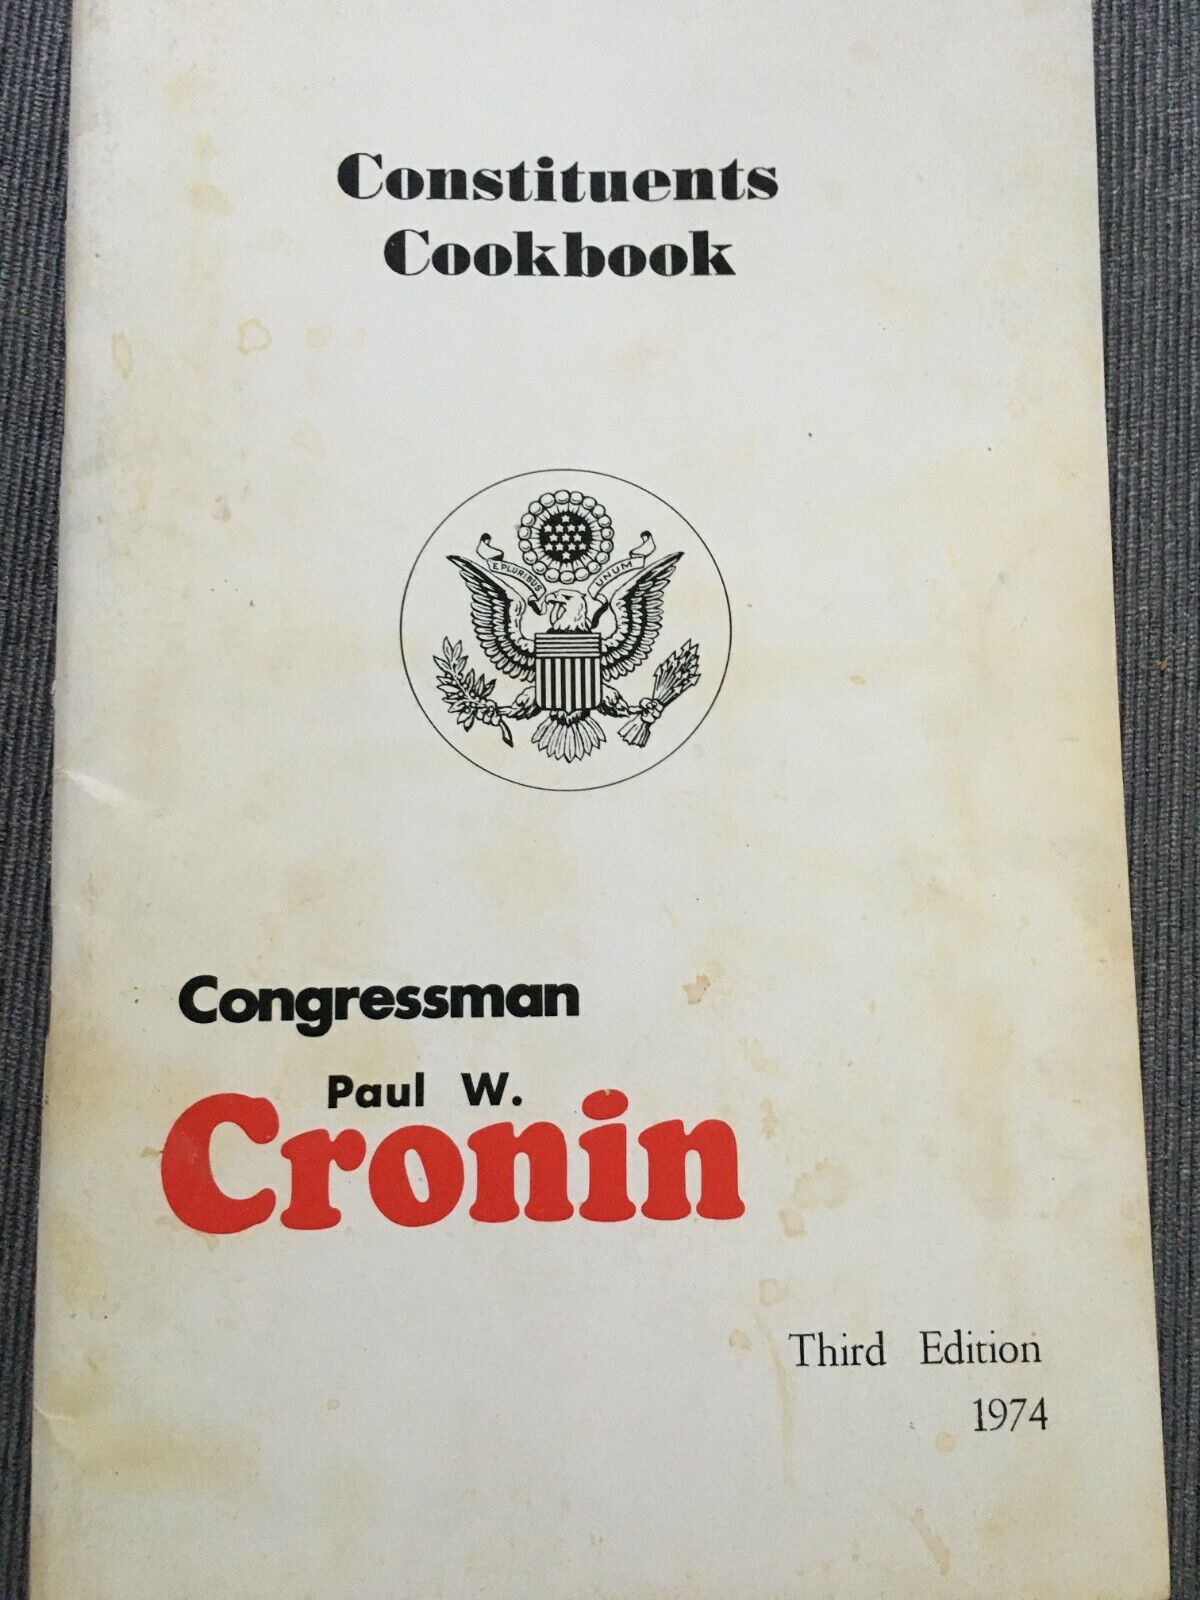 Paul Cronin US Congress MA Constituent Cookbook 1974 3rd edition